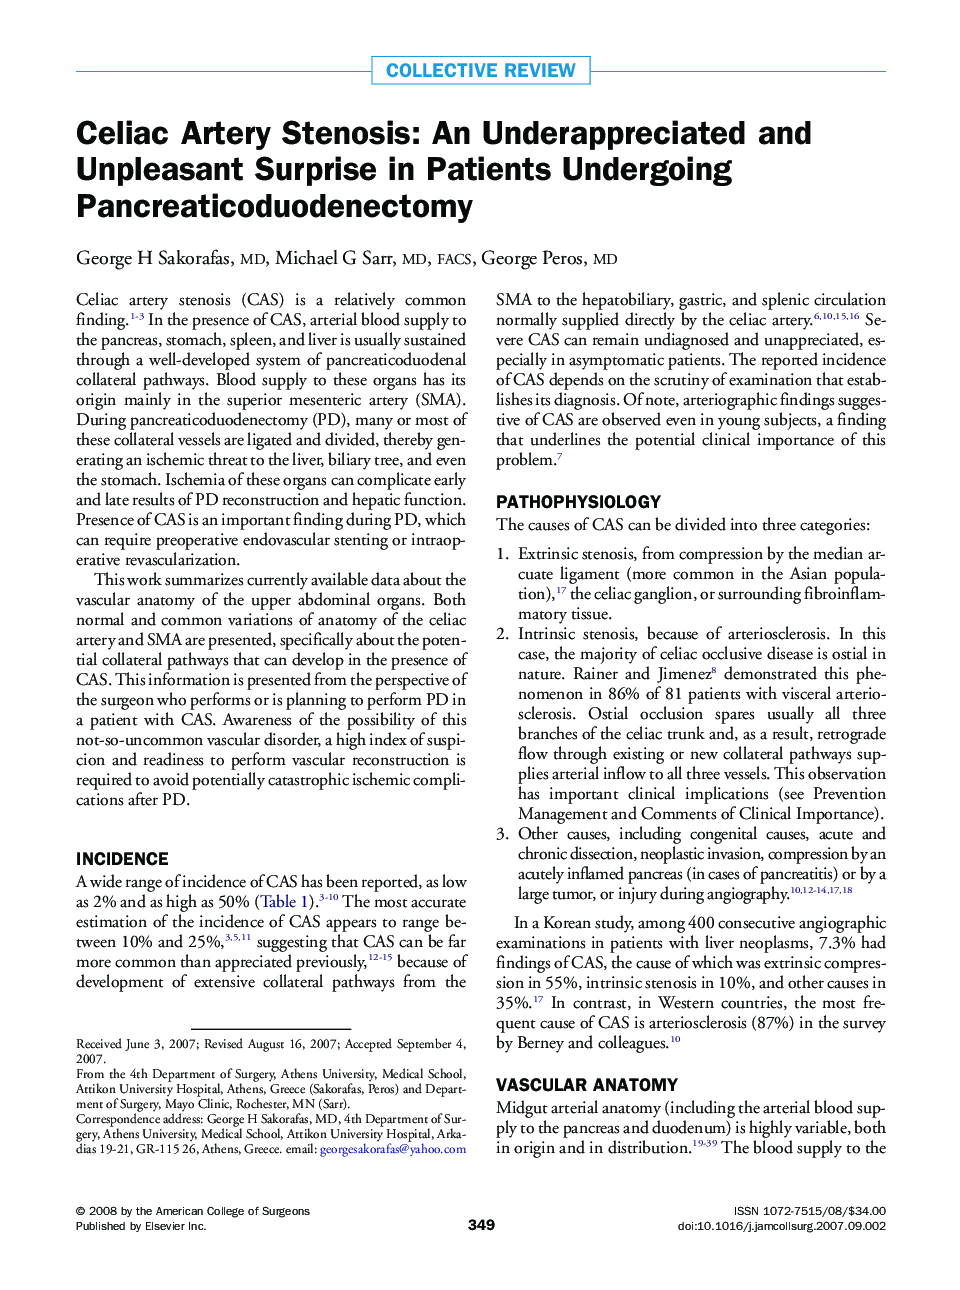 Celiac Artery Stenosis: An Underappreciated and Unpleasant Surprise in Patients Undergoing Pancreaticoduodenectomy